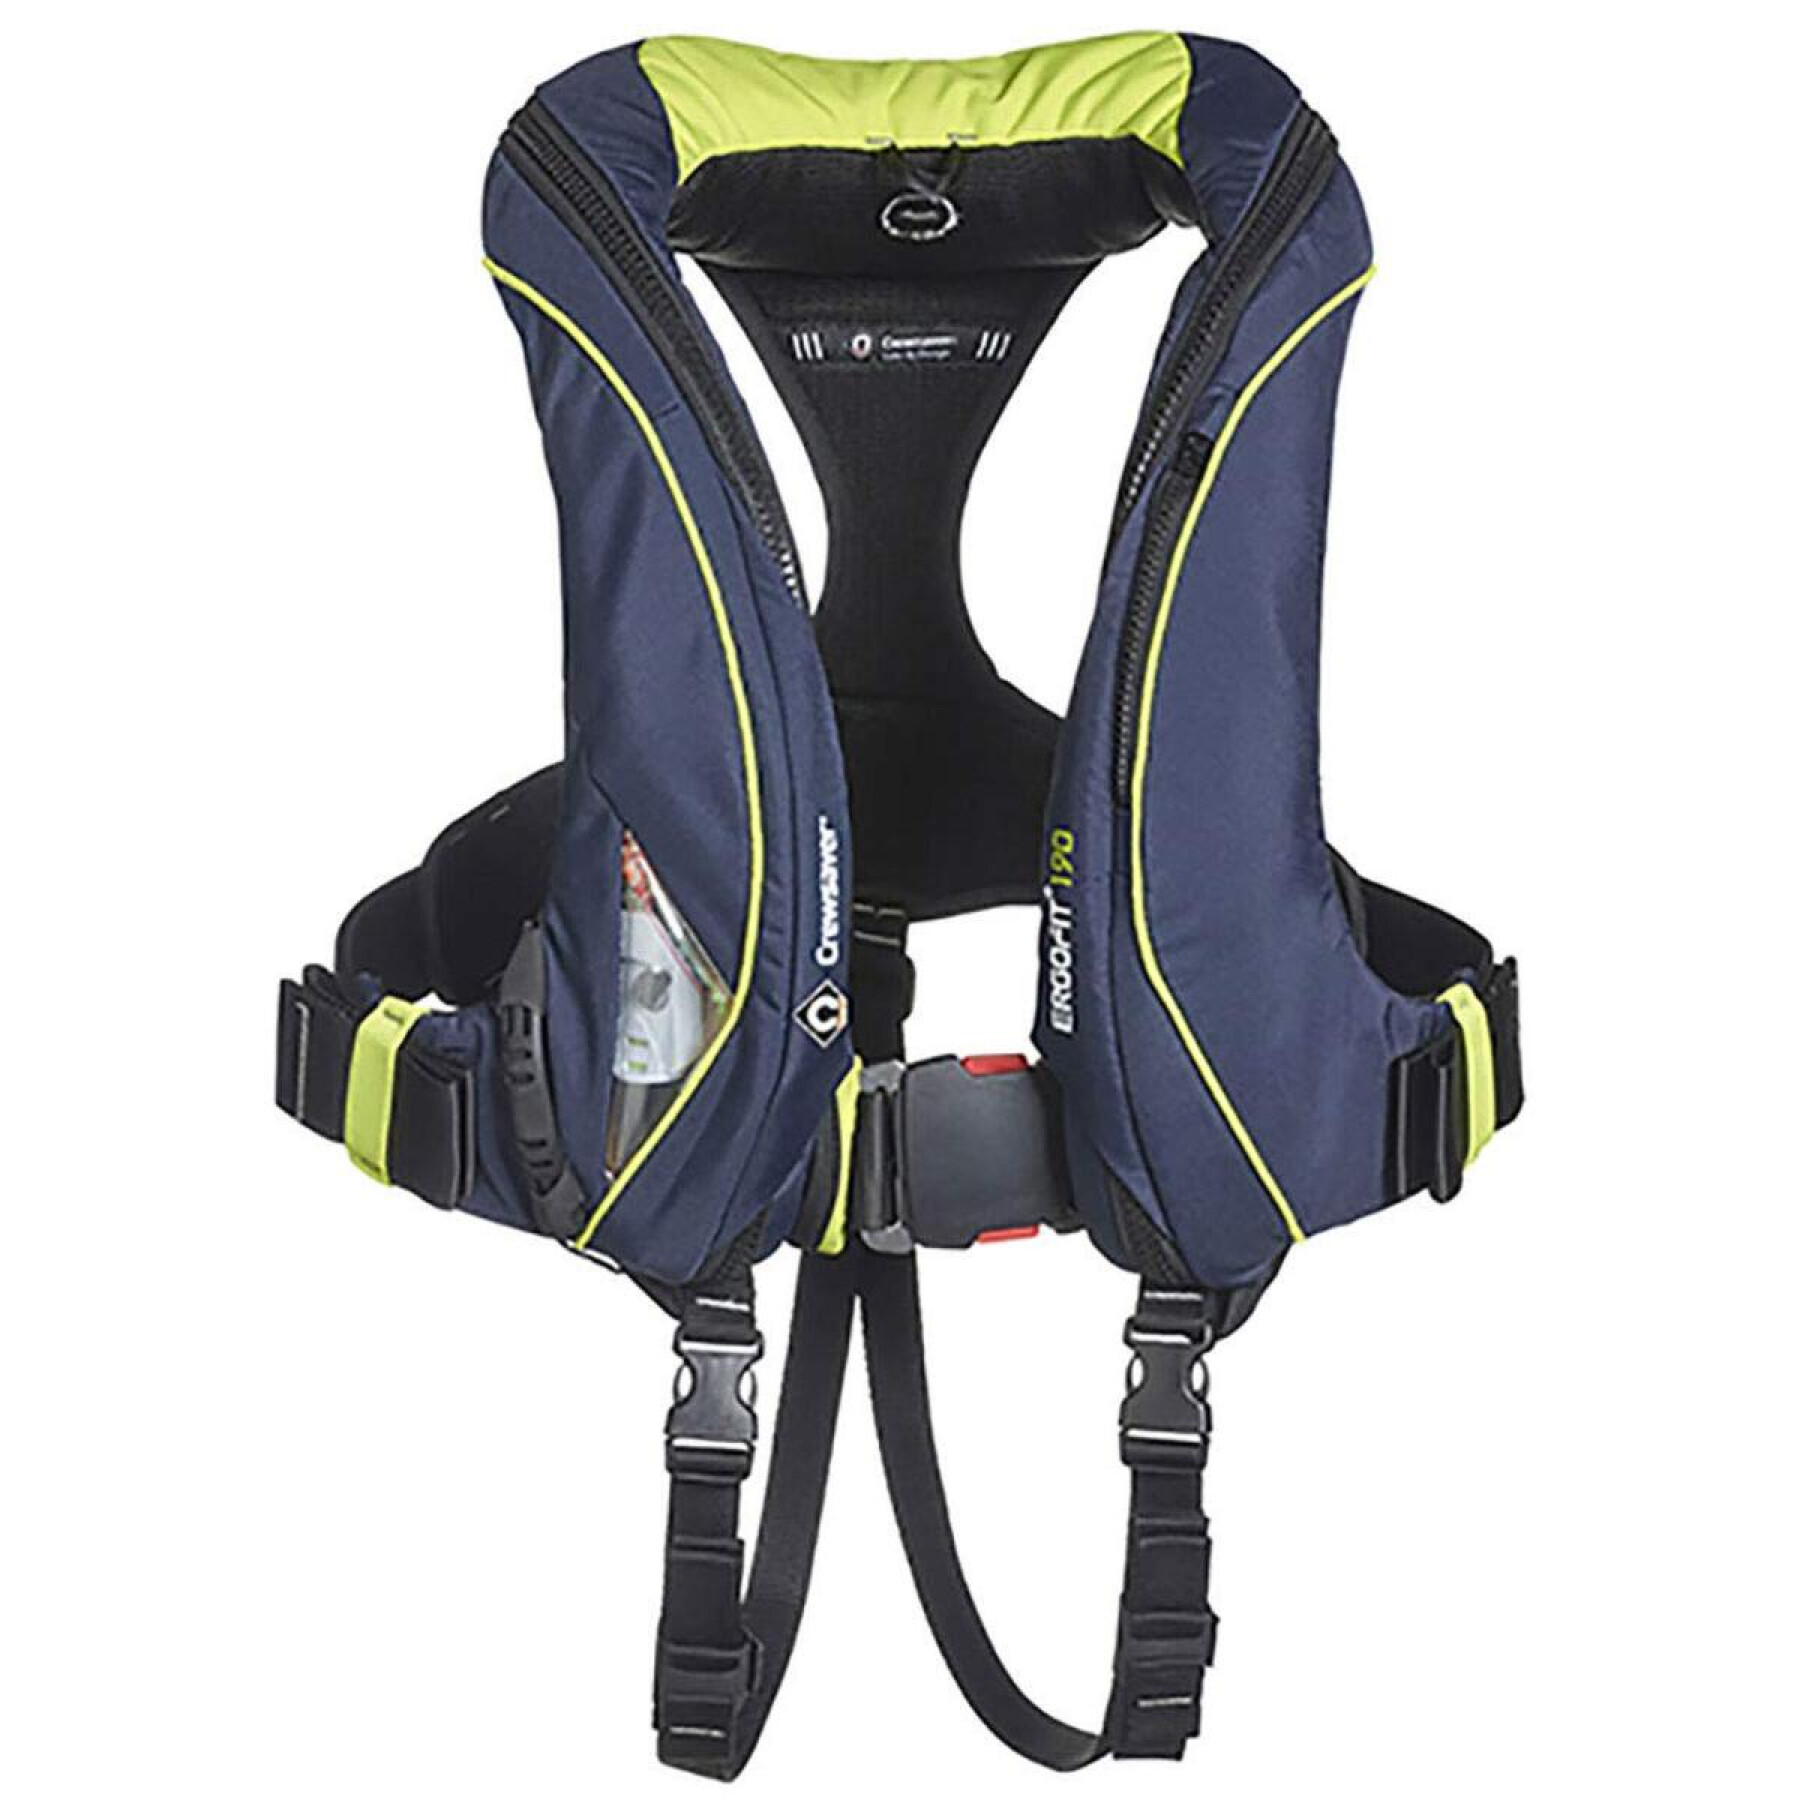 Lifejacket with harness, flashlight and hood Crewsaver ERGOFIT+ 290N